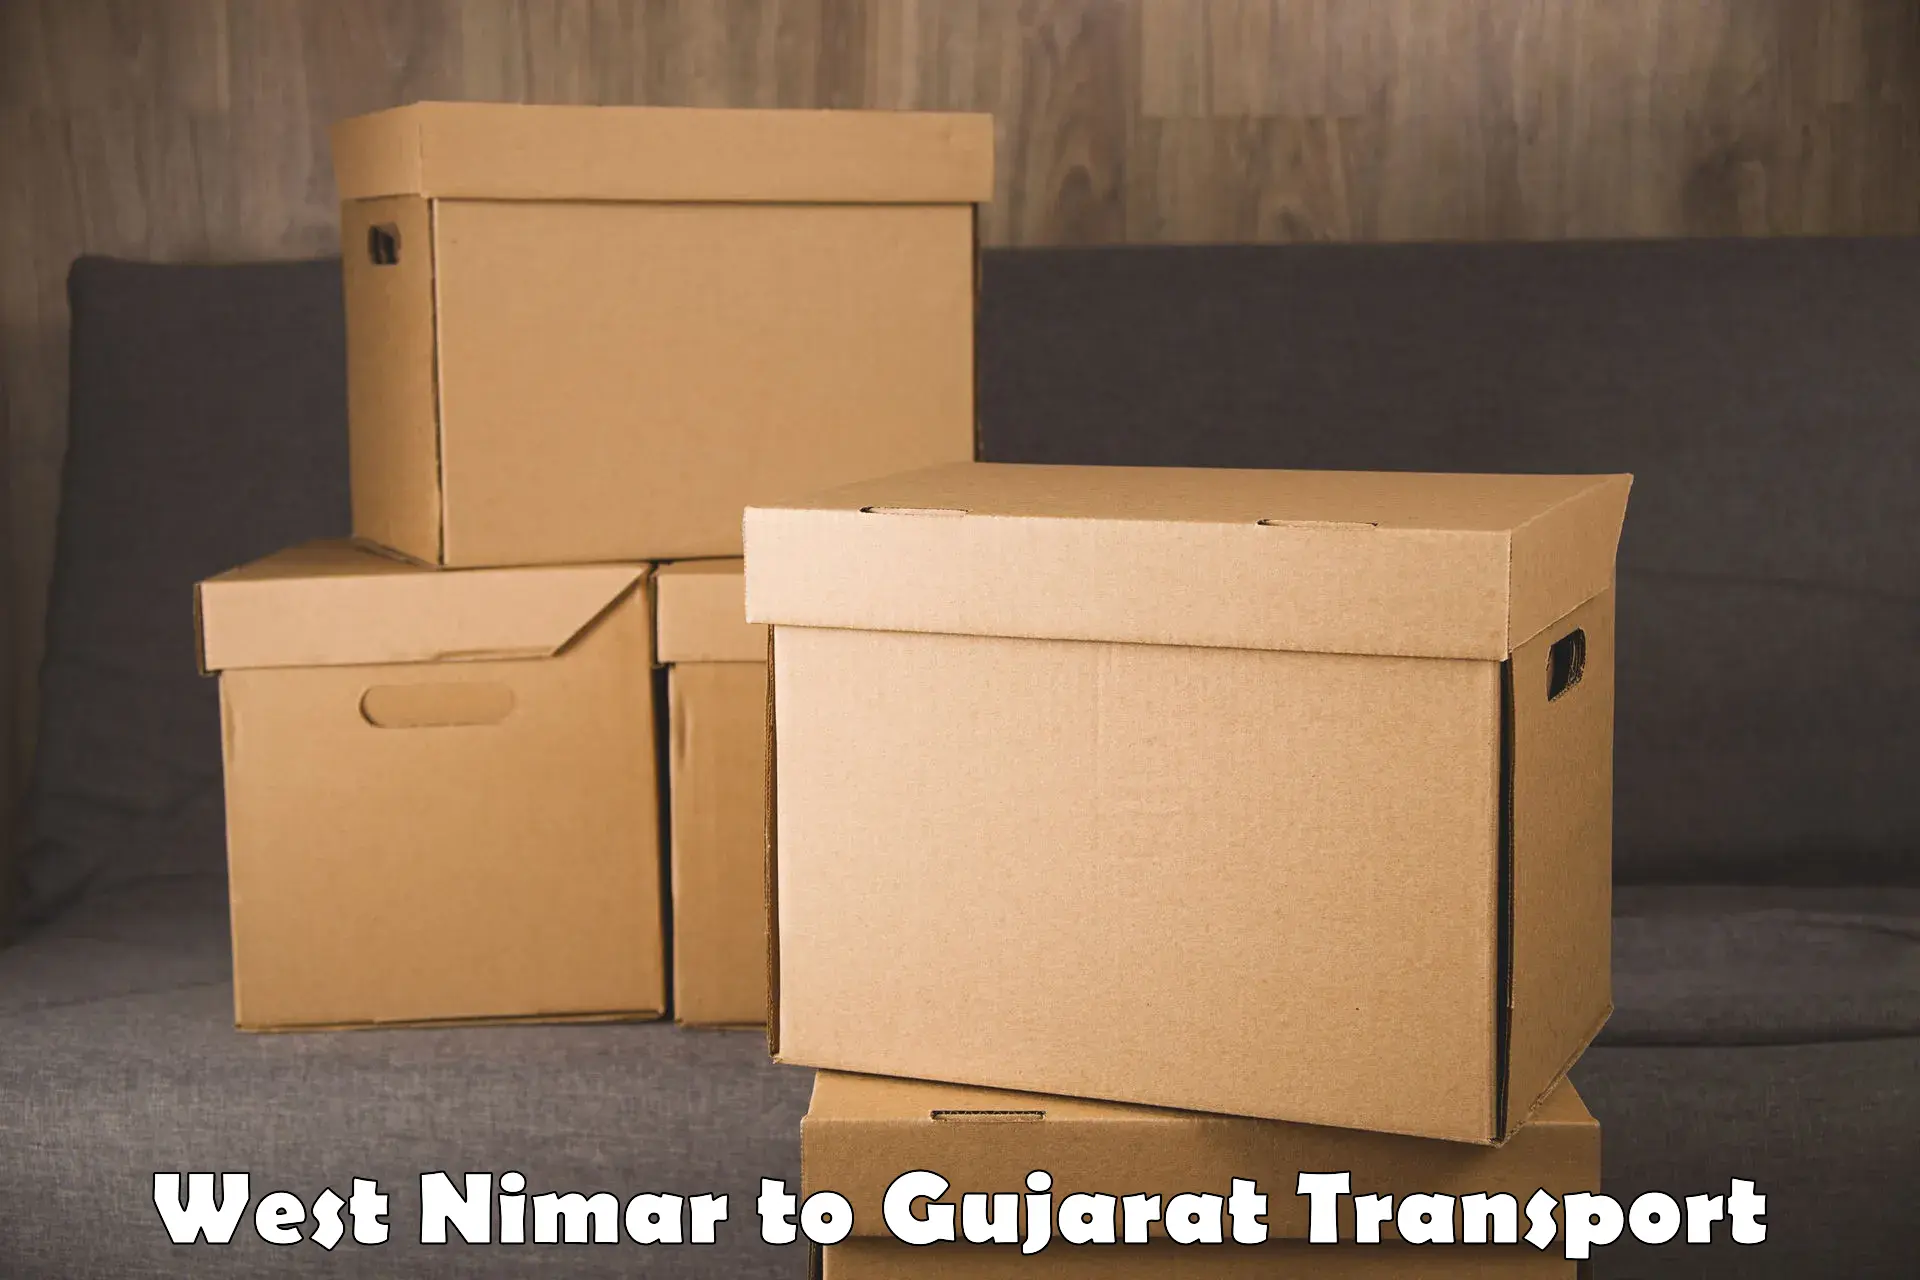 Goods delivery service West Nimar to Gujarat